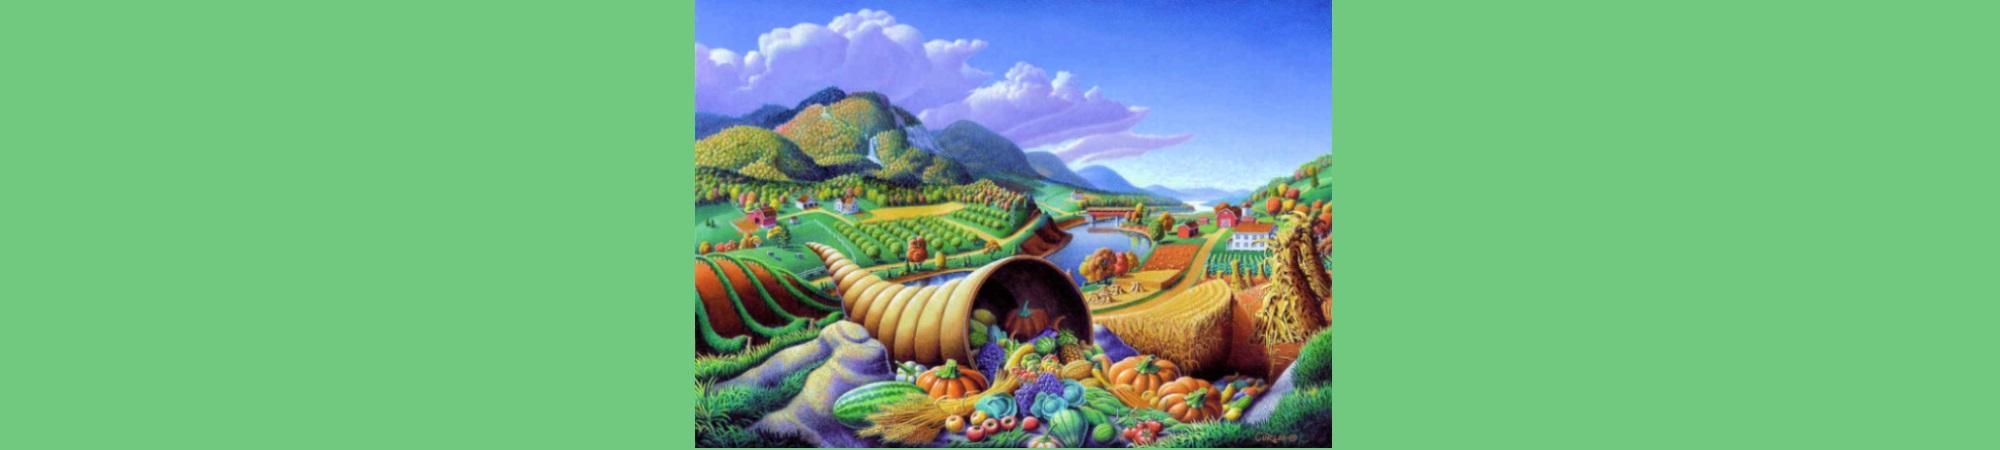 Artistic image evoking a cornucopia producing farm crops. 